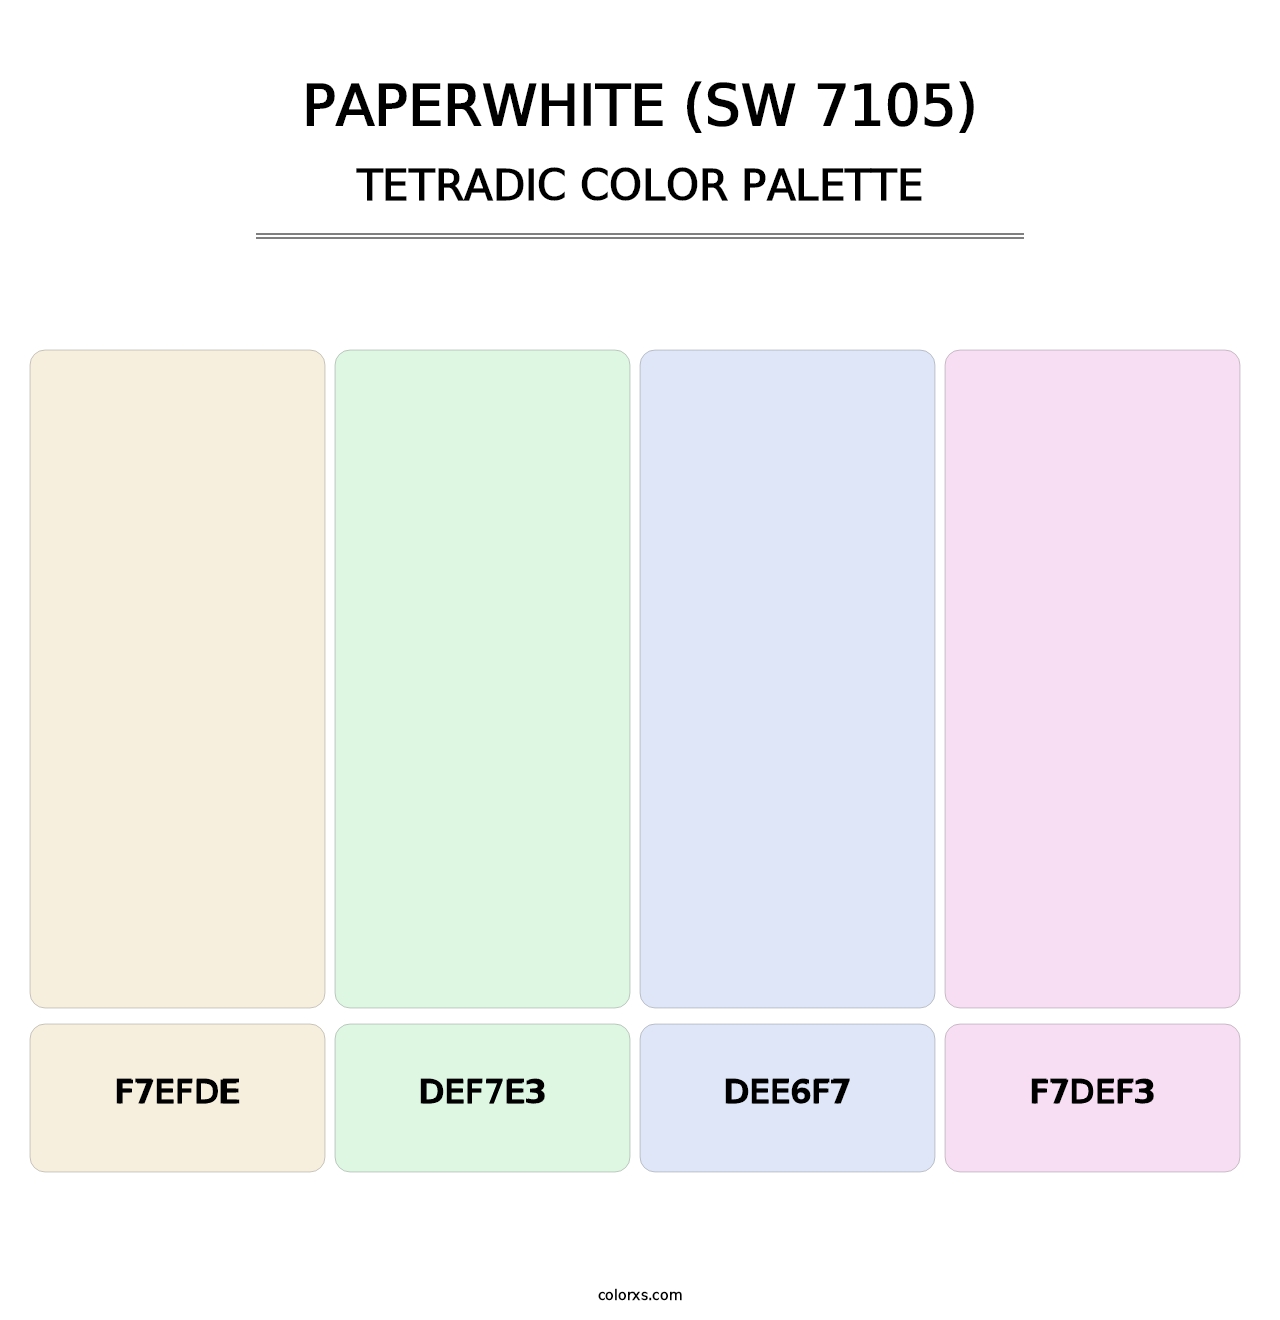 Paperwhite (SW 7105) - Tetradic Color Palette